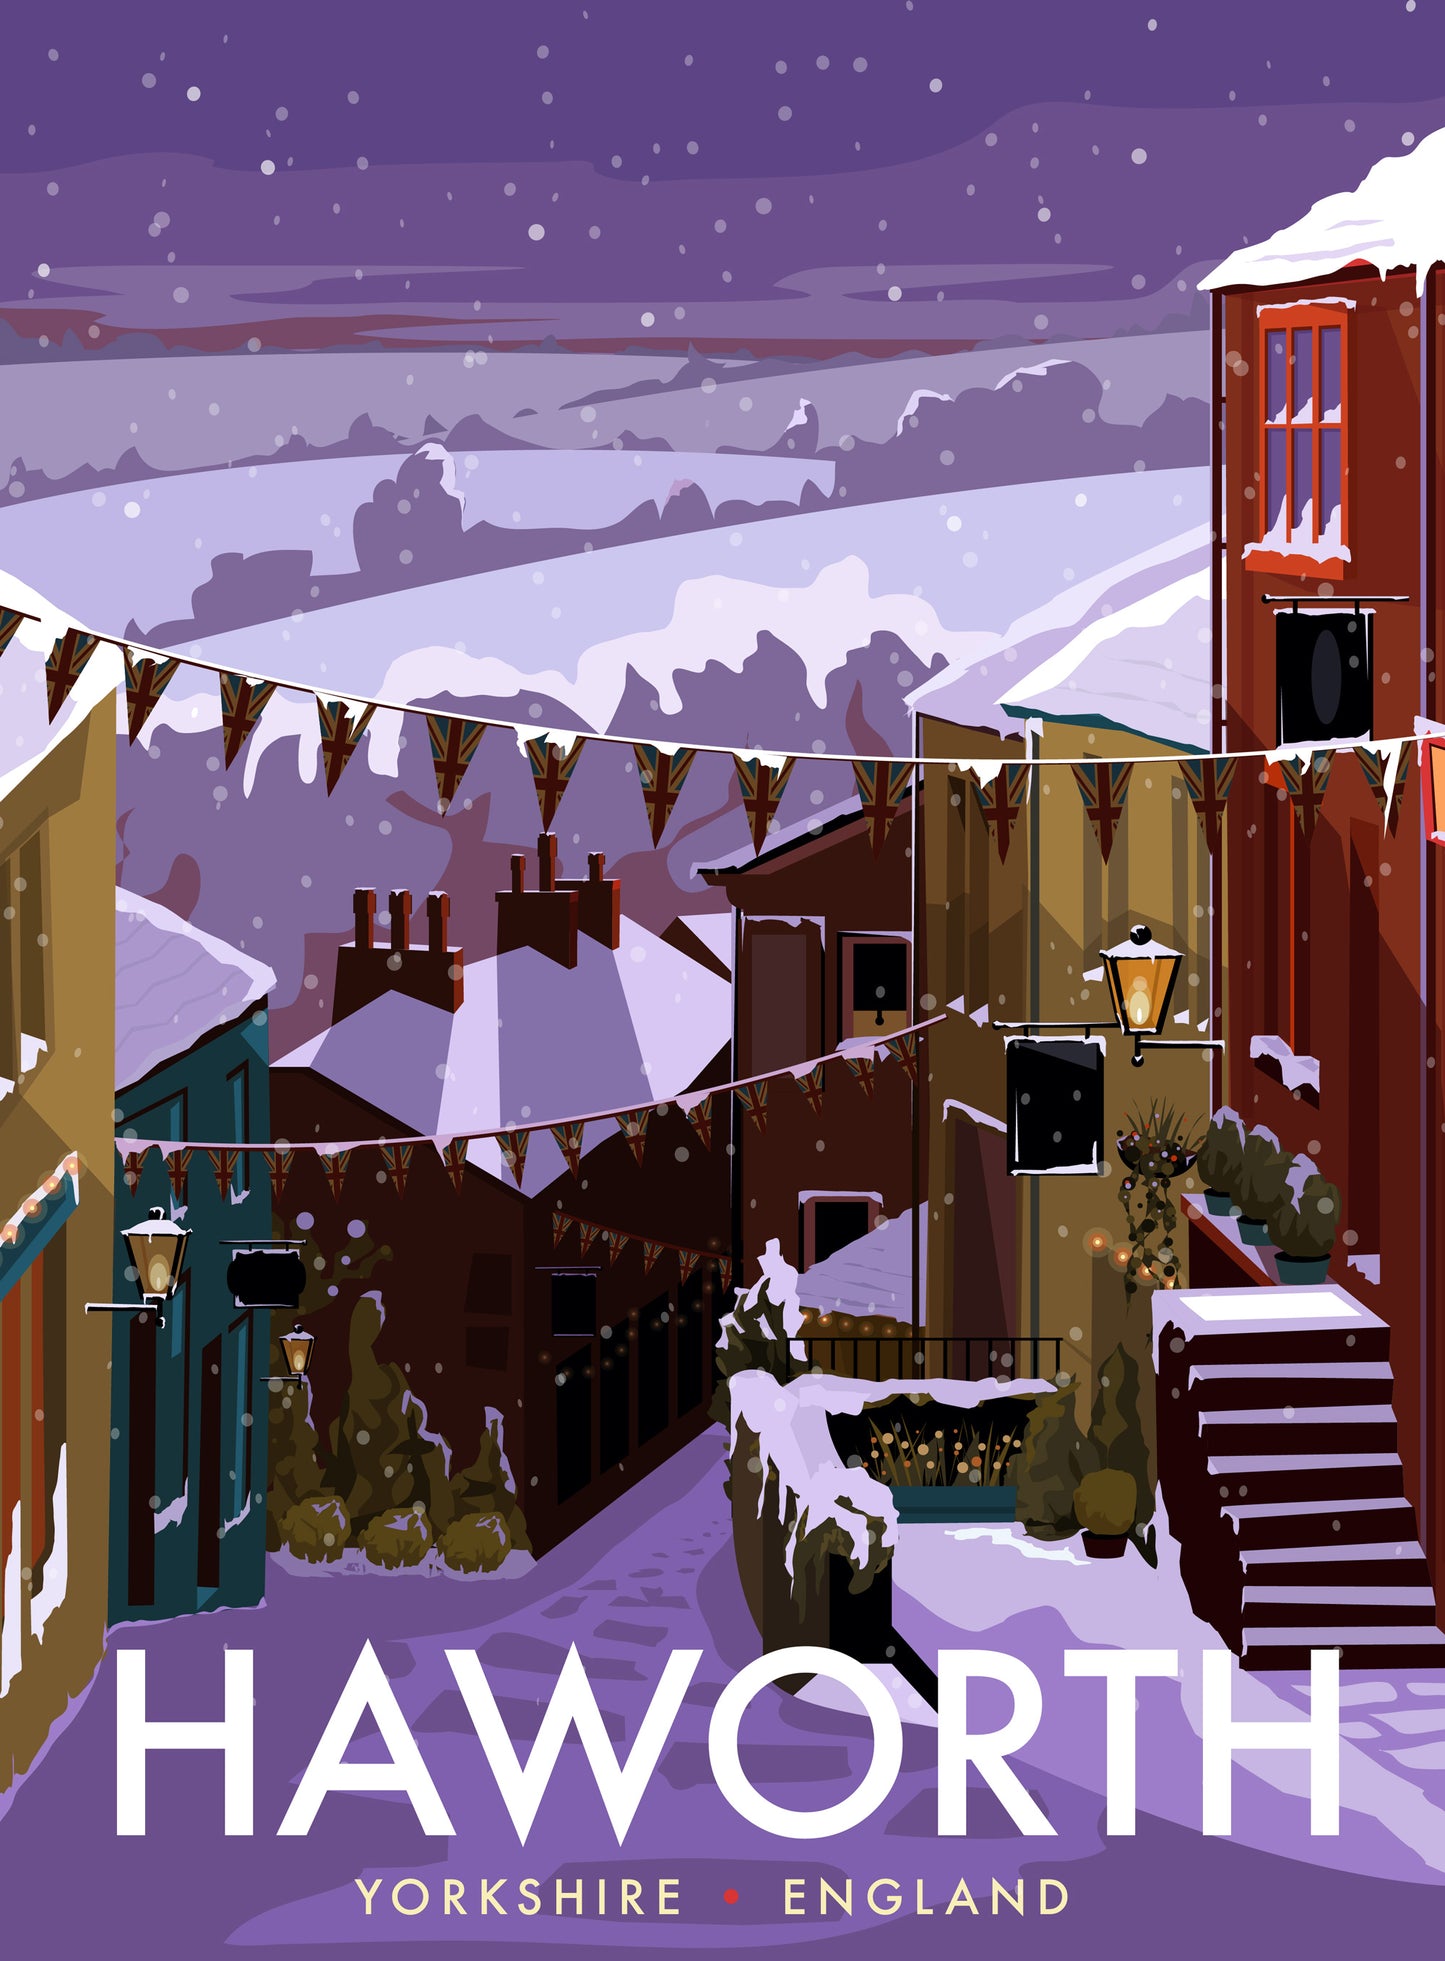 Haworth Snow Travel Poster